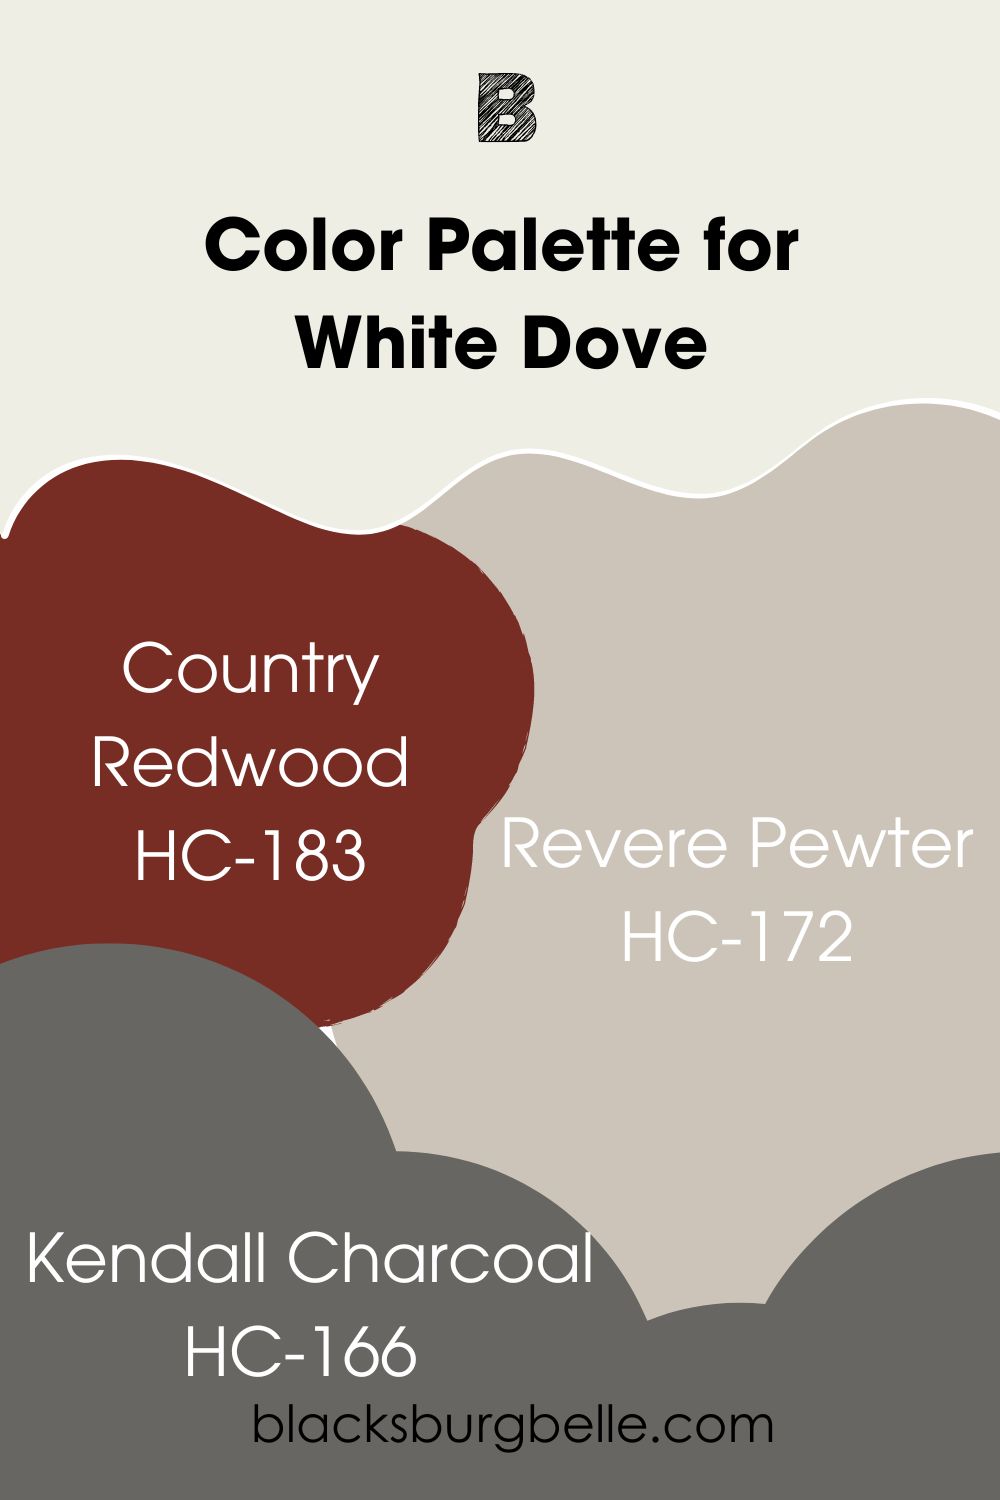 Color Palette for BM White Dove